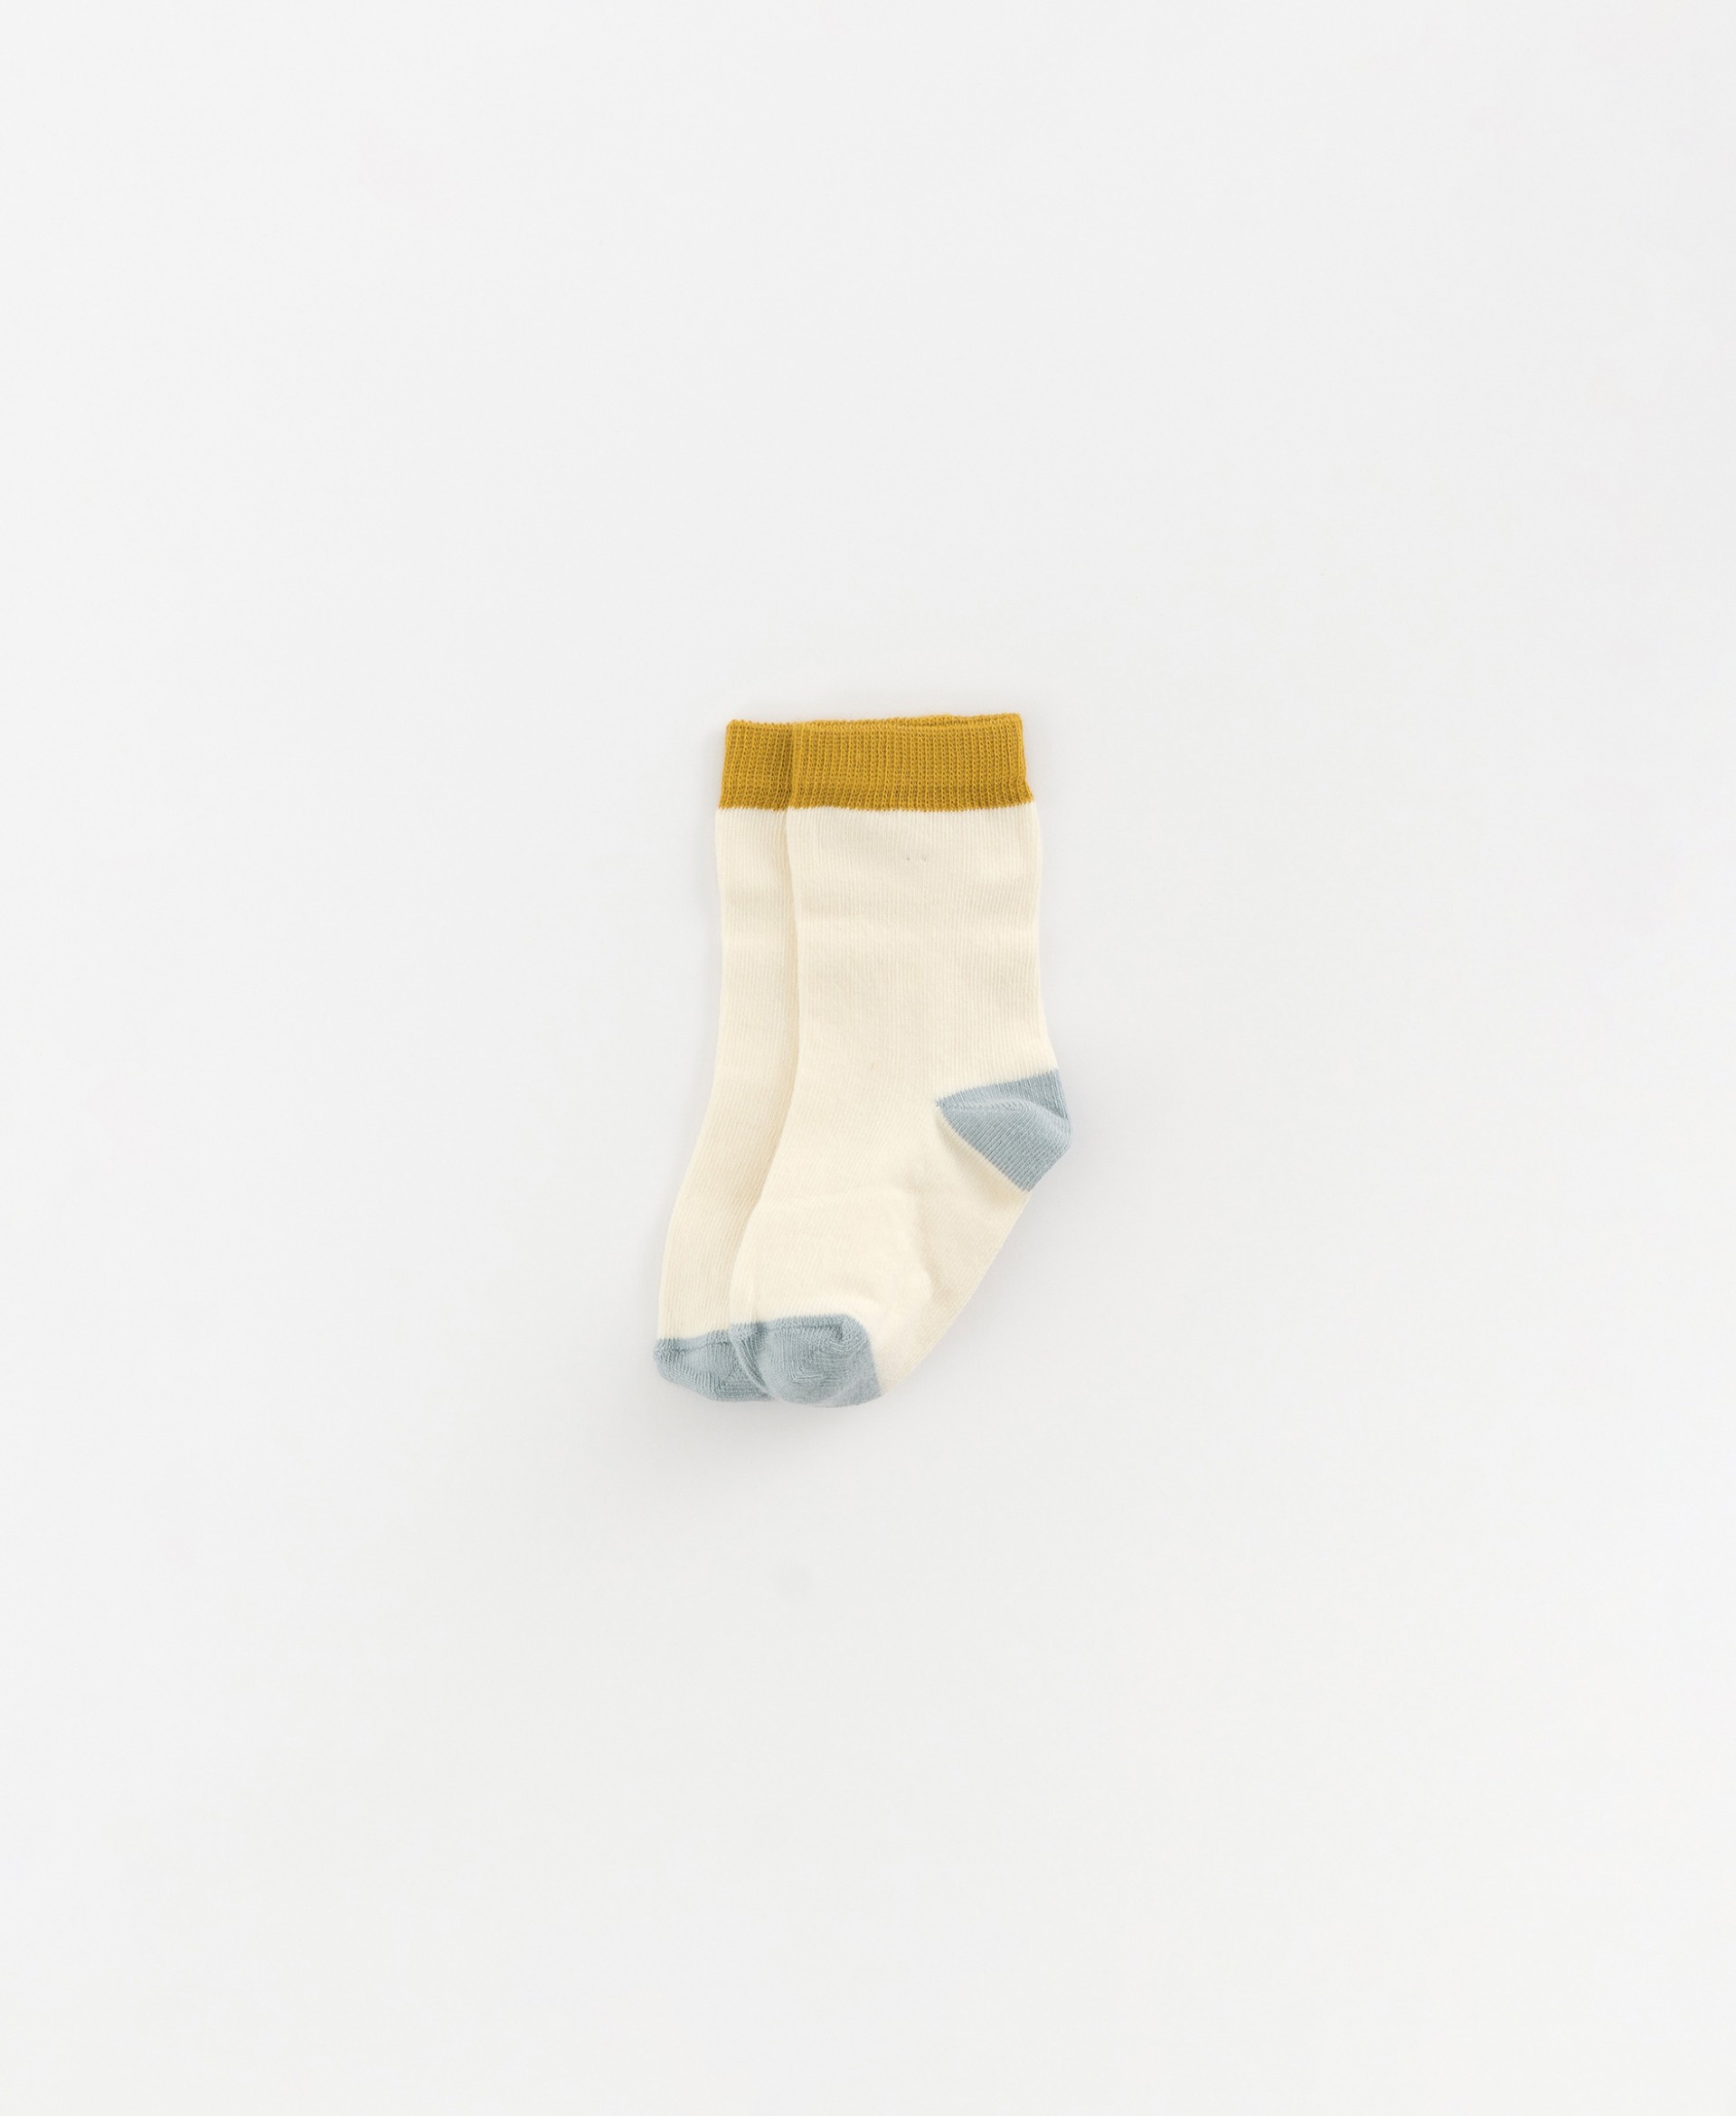 Socks in contrasting colors | Organic Care